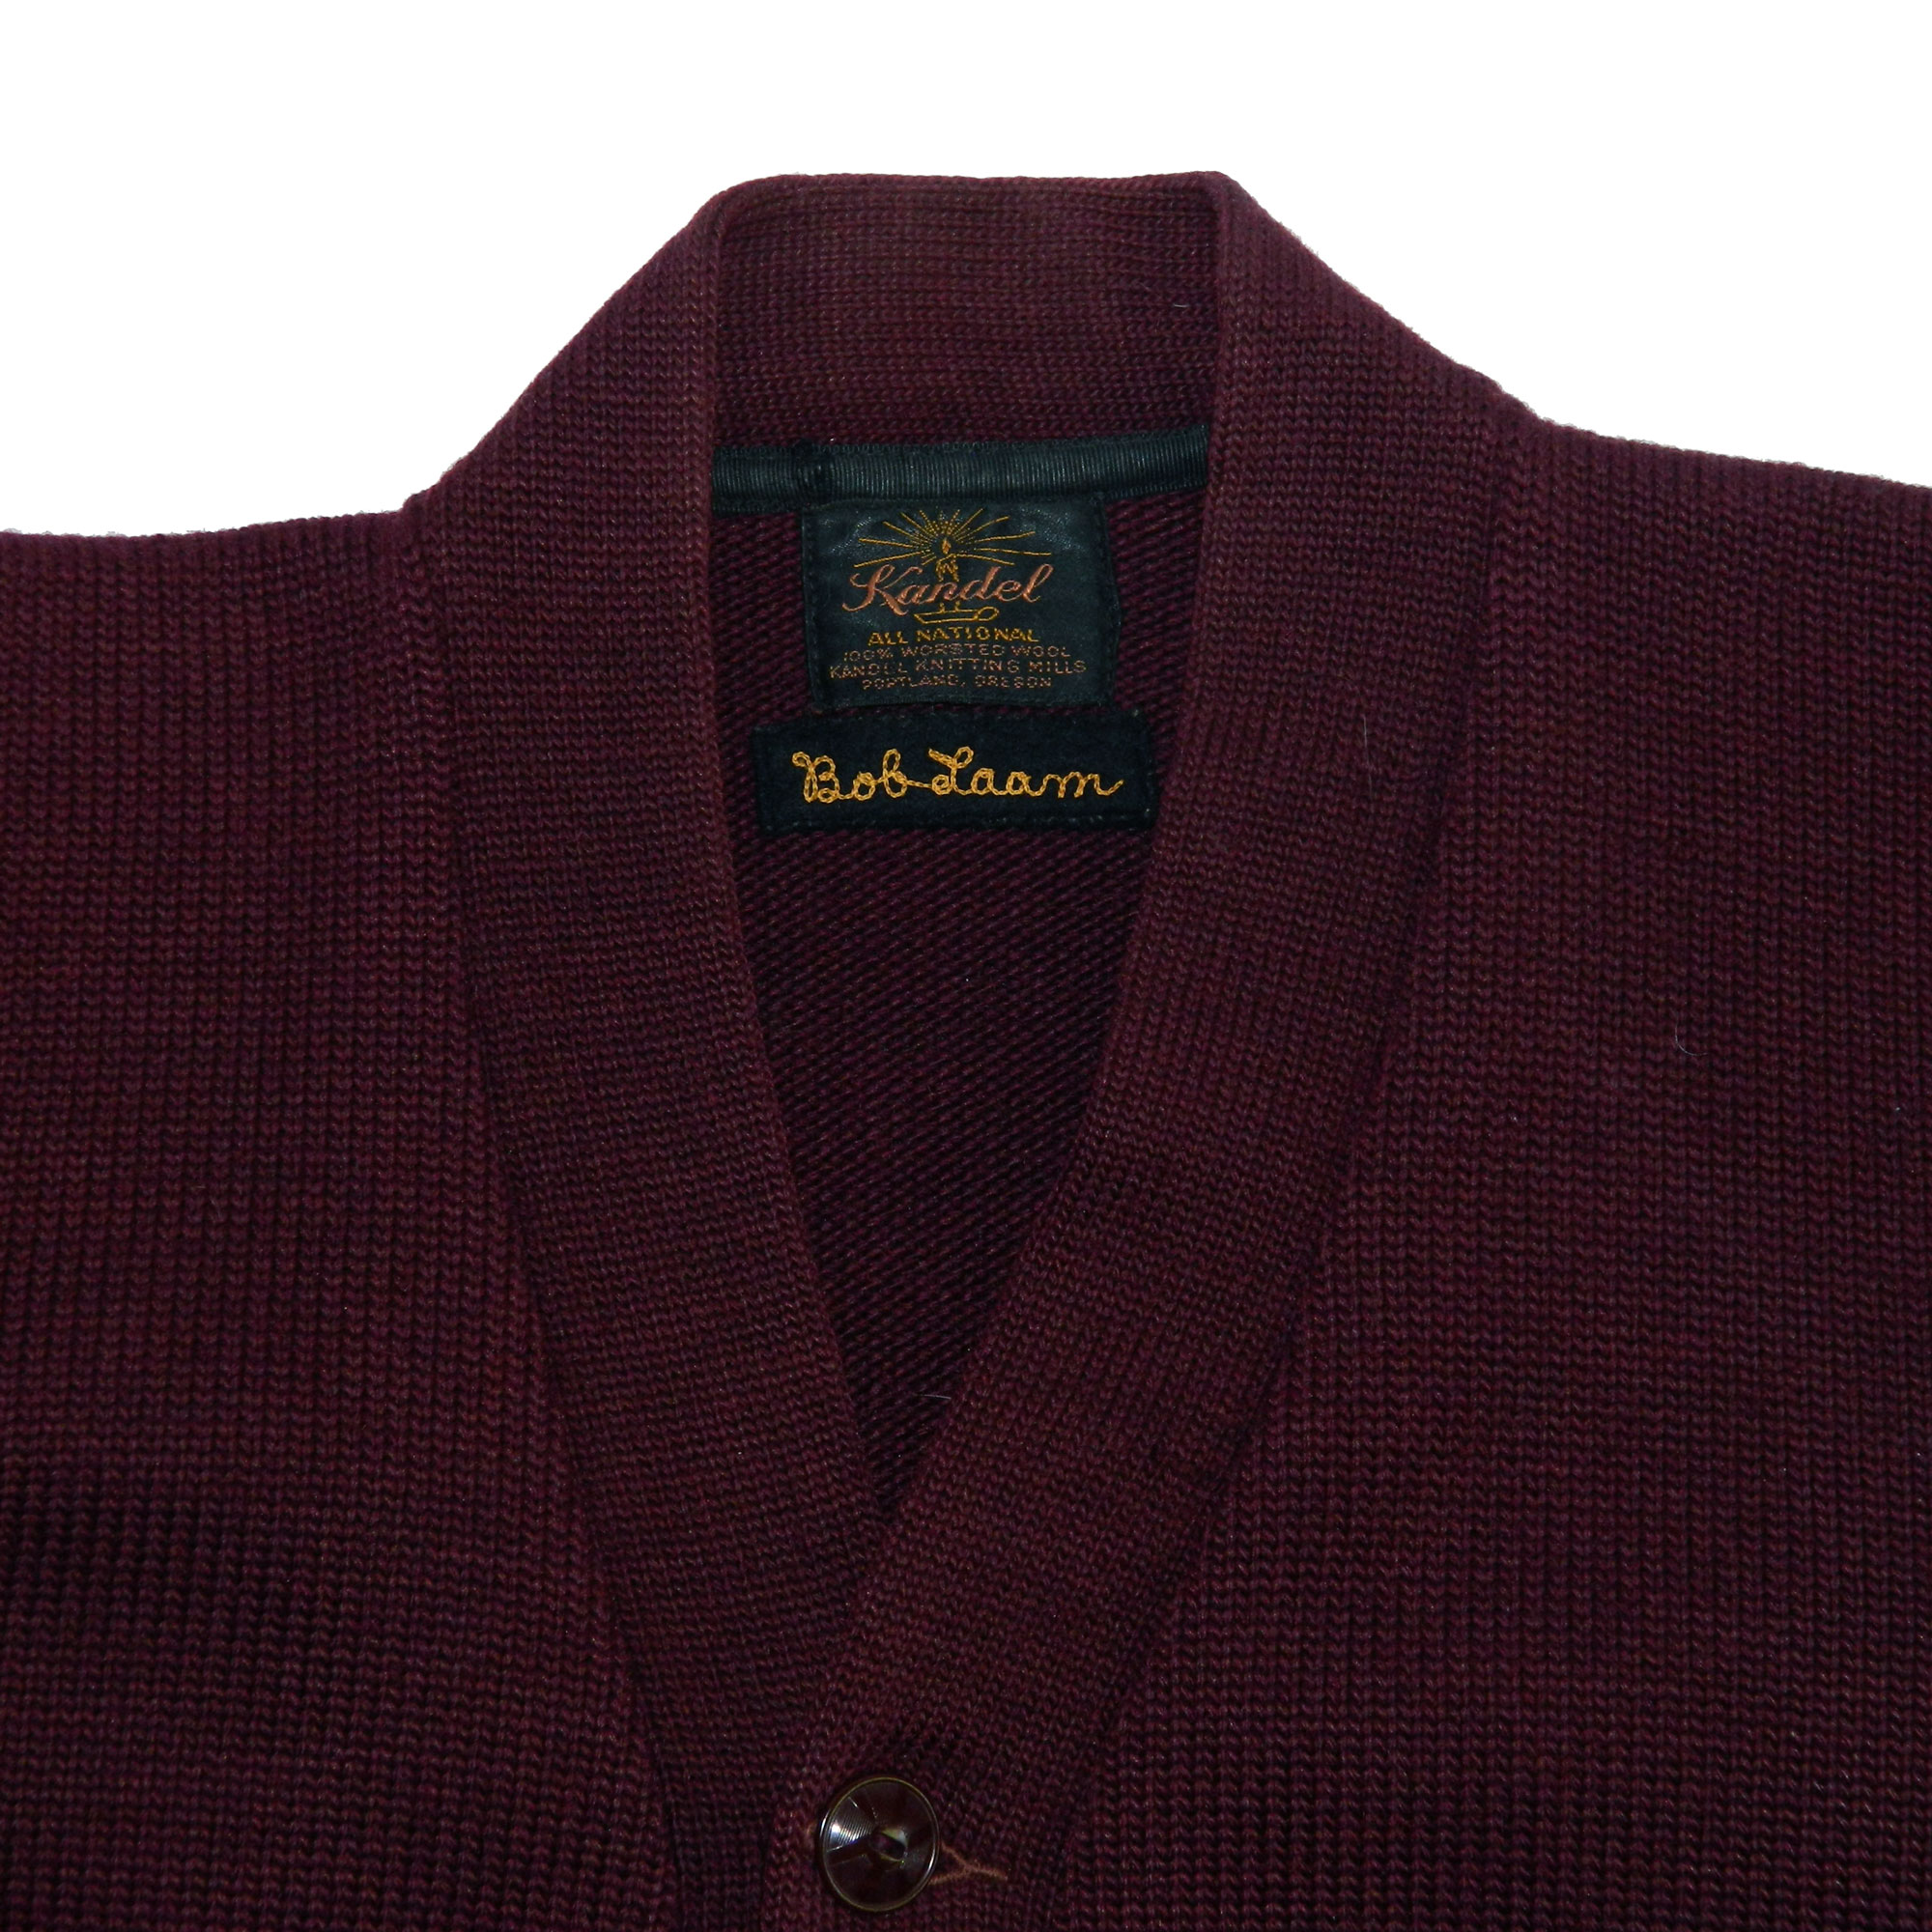 vintage letterman sweater